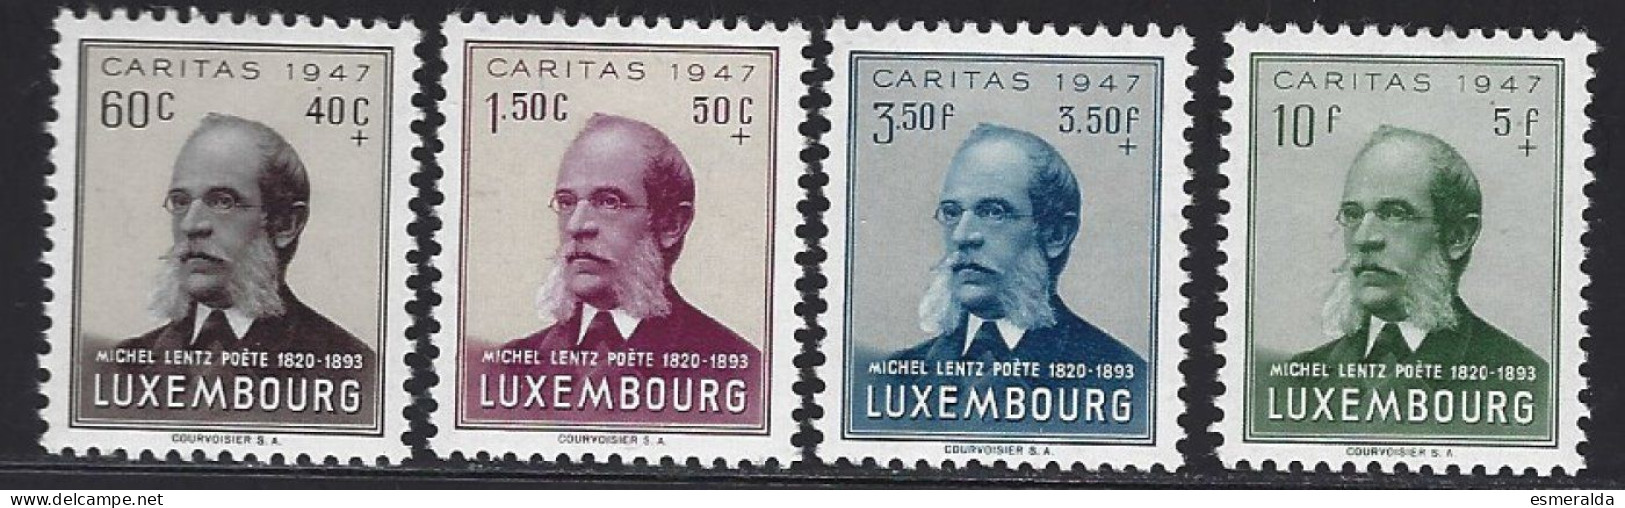 Luxembourg Yv 402/05,Caritas 1947,Michel Lentz,poète  **/mnh - Nuevos